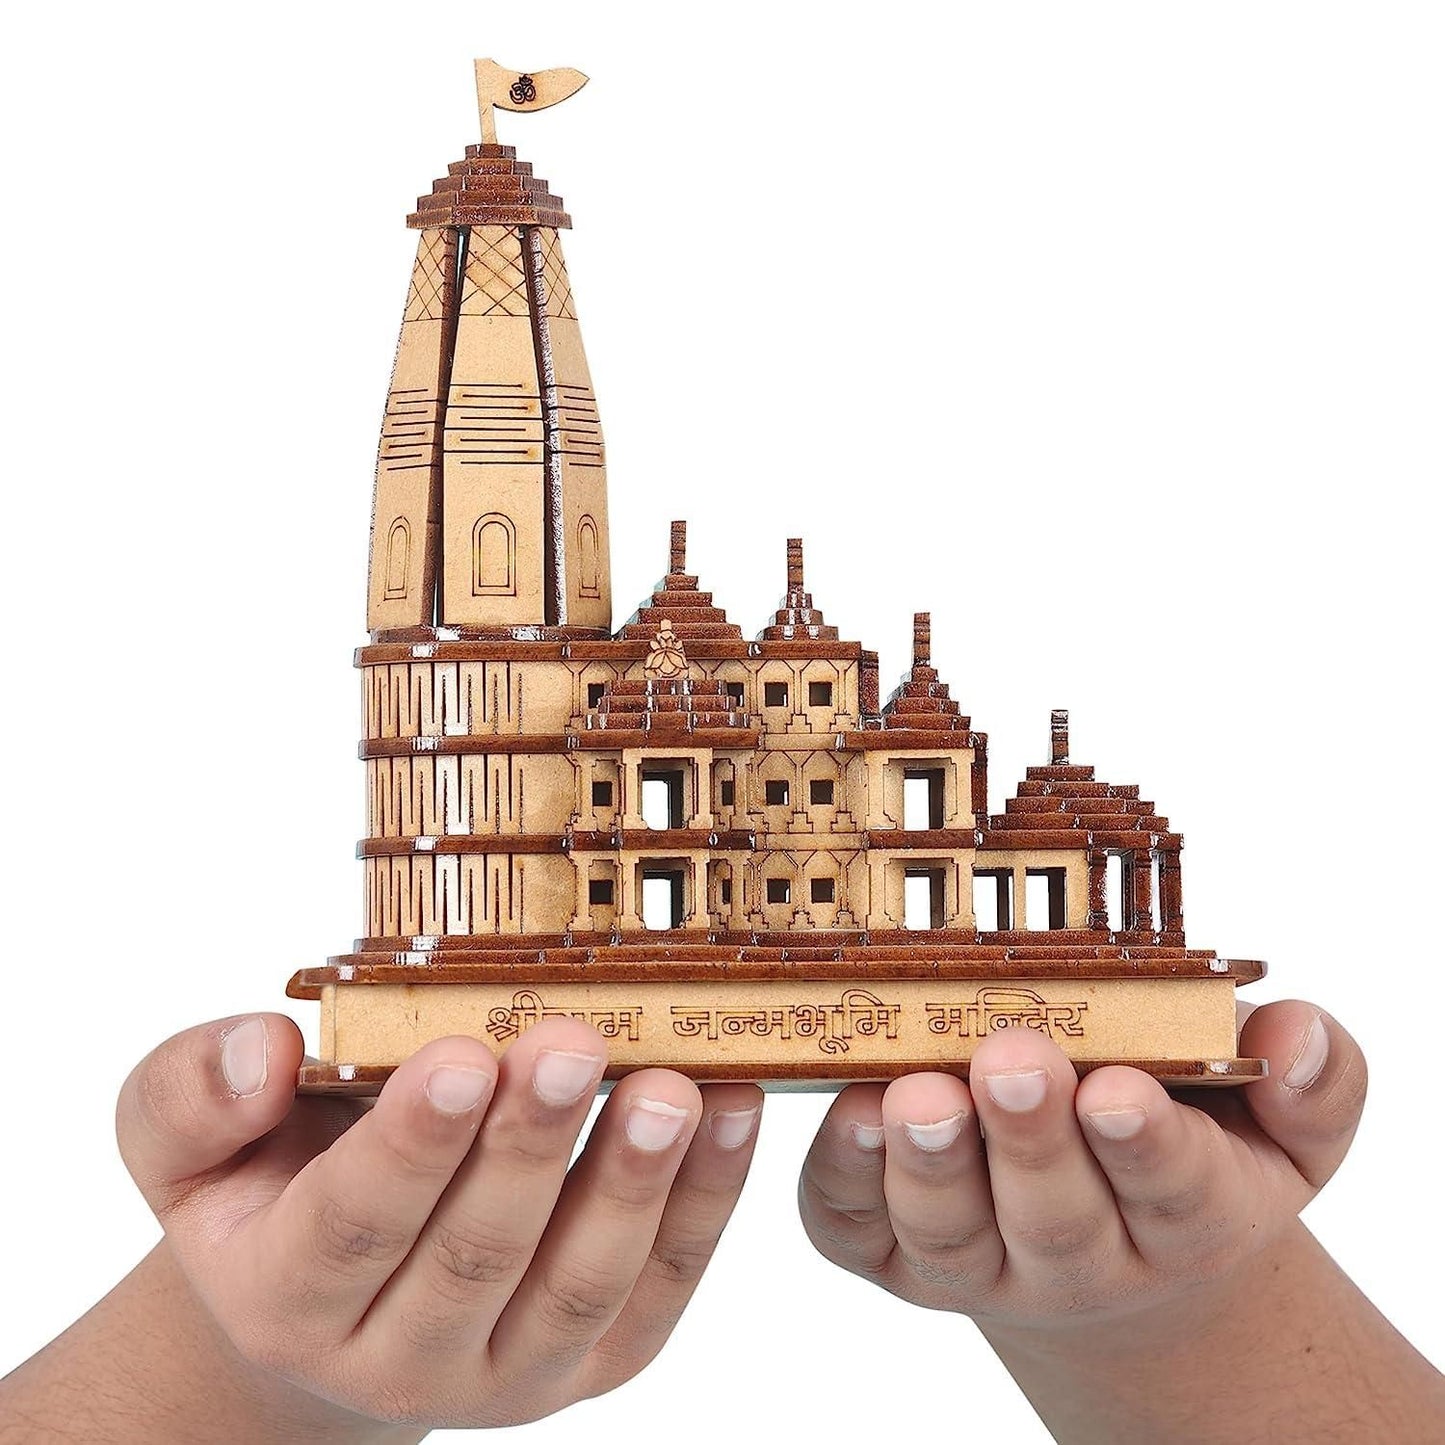 Ayodhya Temple - Shri Ram Mandir 3D Wooden Temple For Home/Office/Shop